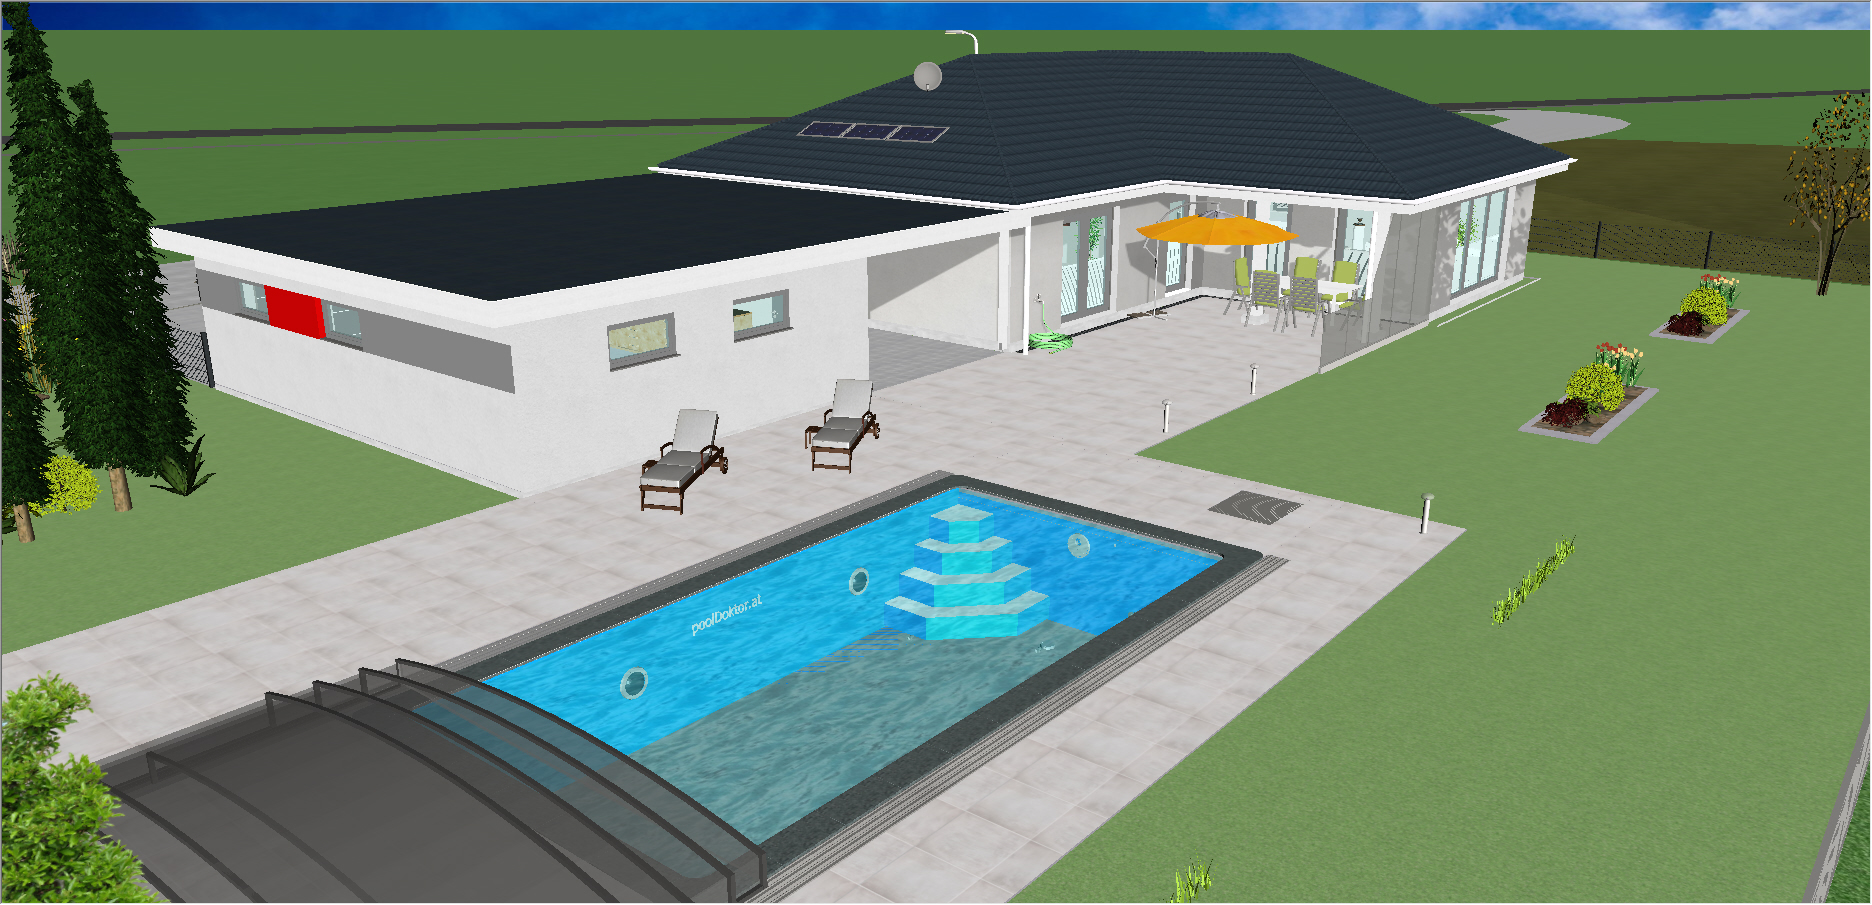 Bau, Danwood, Bungalow mit Garage, Pool, 3-D, Zeichnung